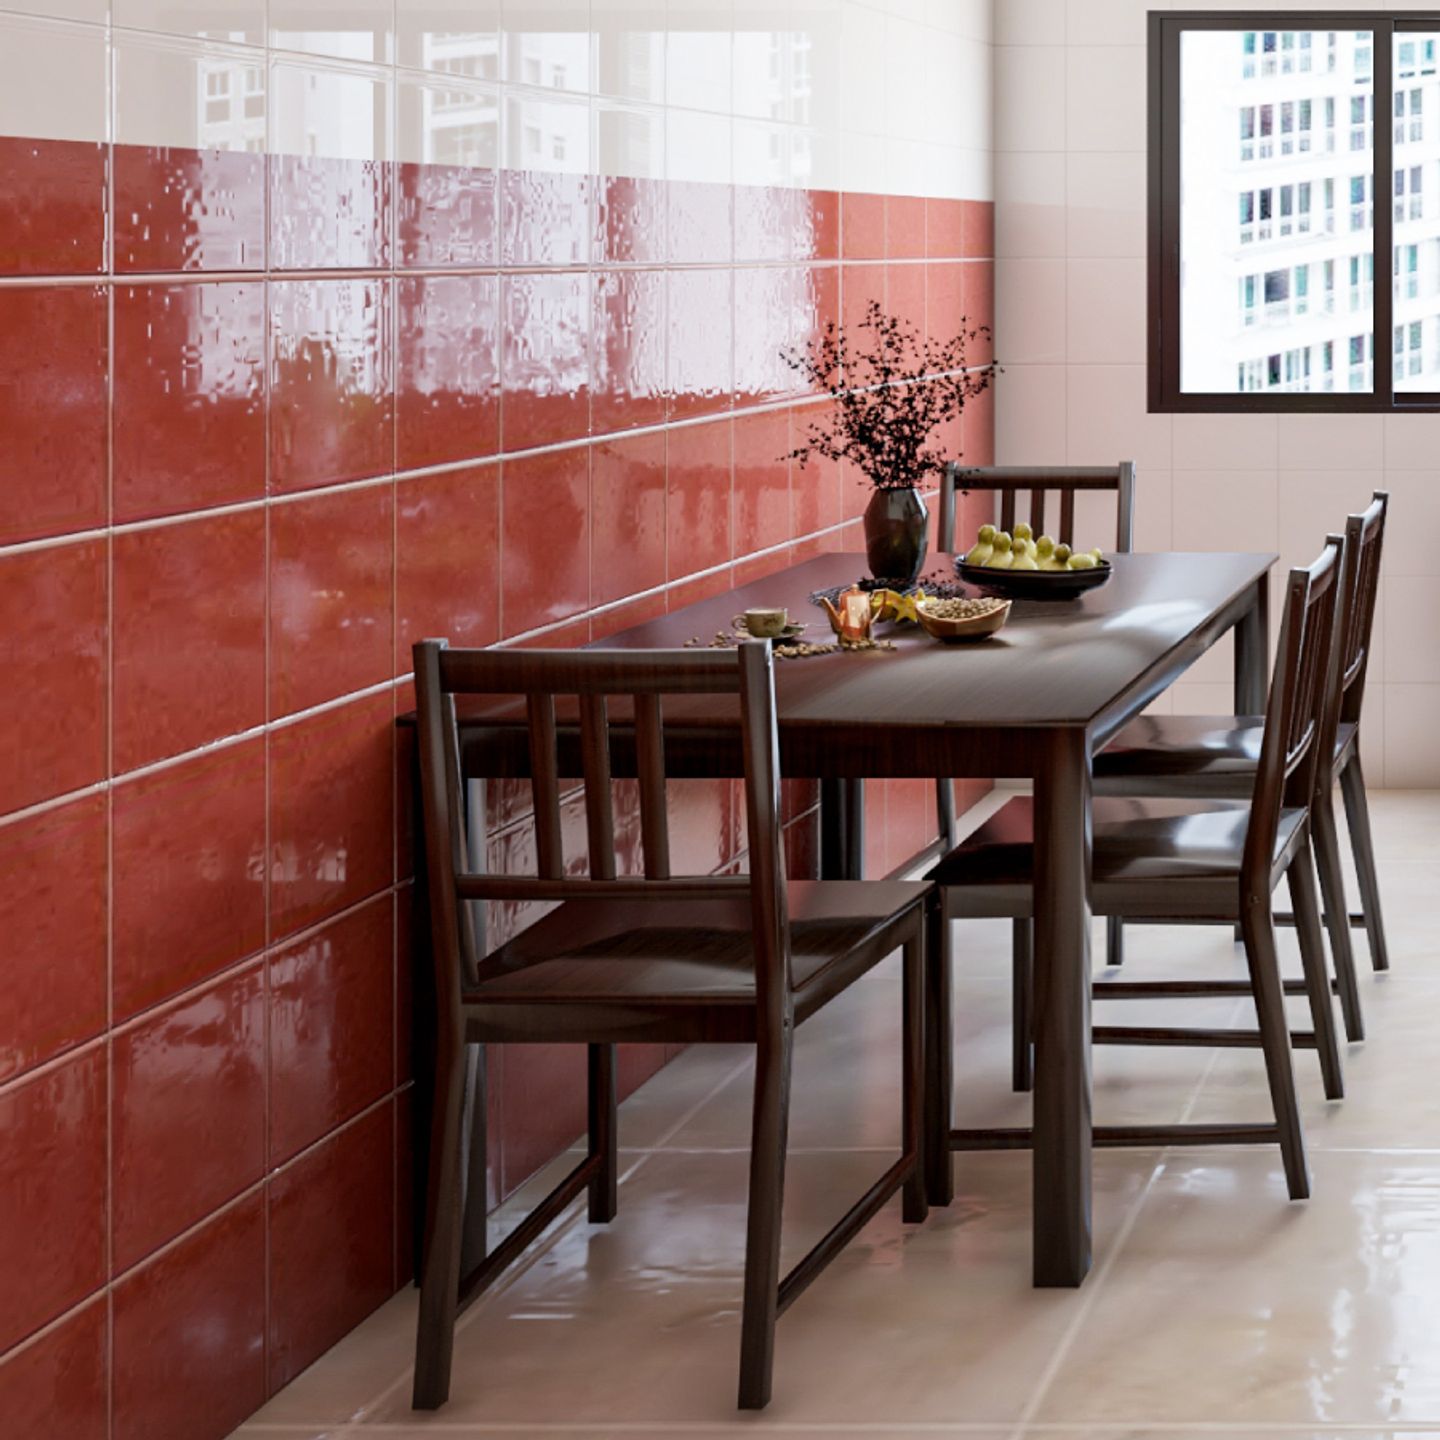 Dual-Tone Ceramic Square Wall Tiles Design - Livspace